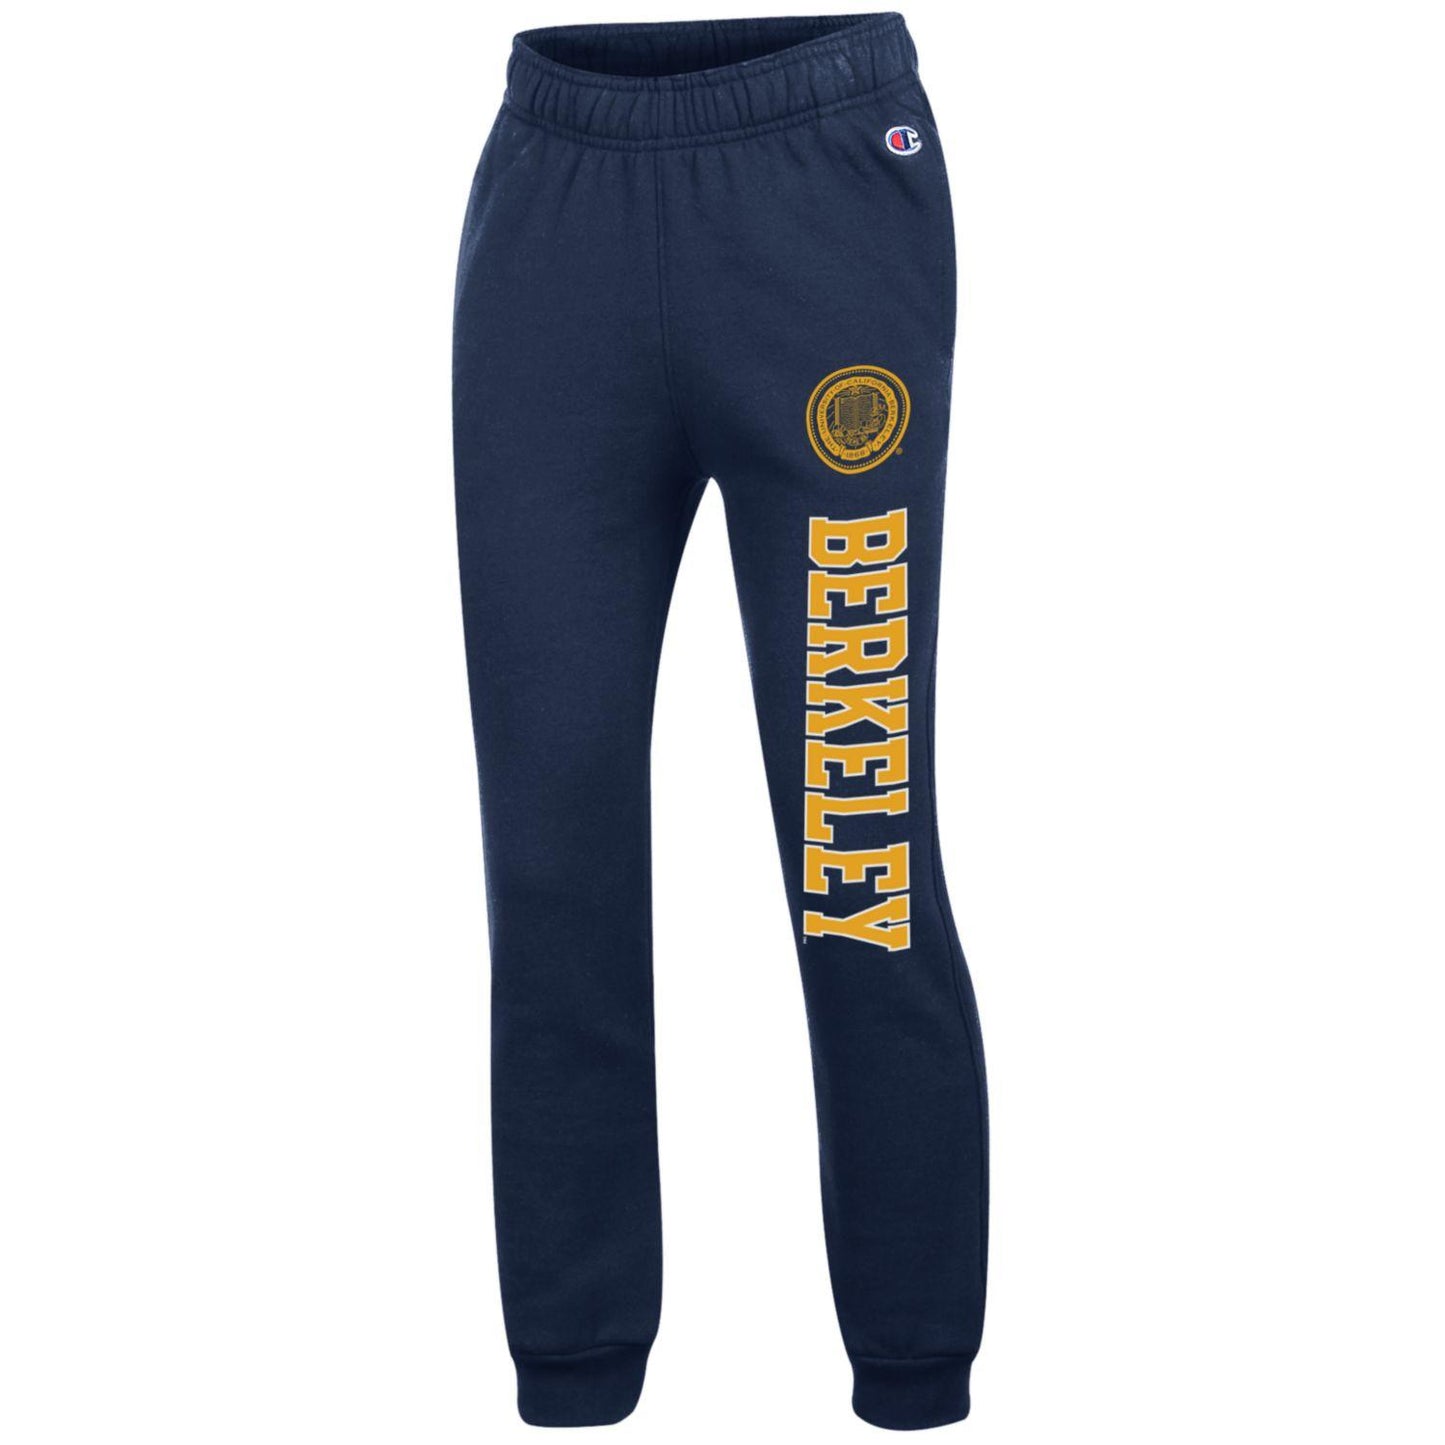 U.C. Berkeley Cal youth jogger pants-Navy-Shop College Wear